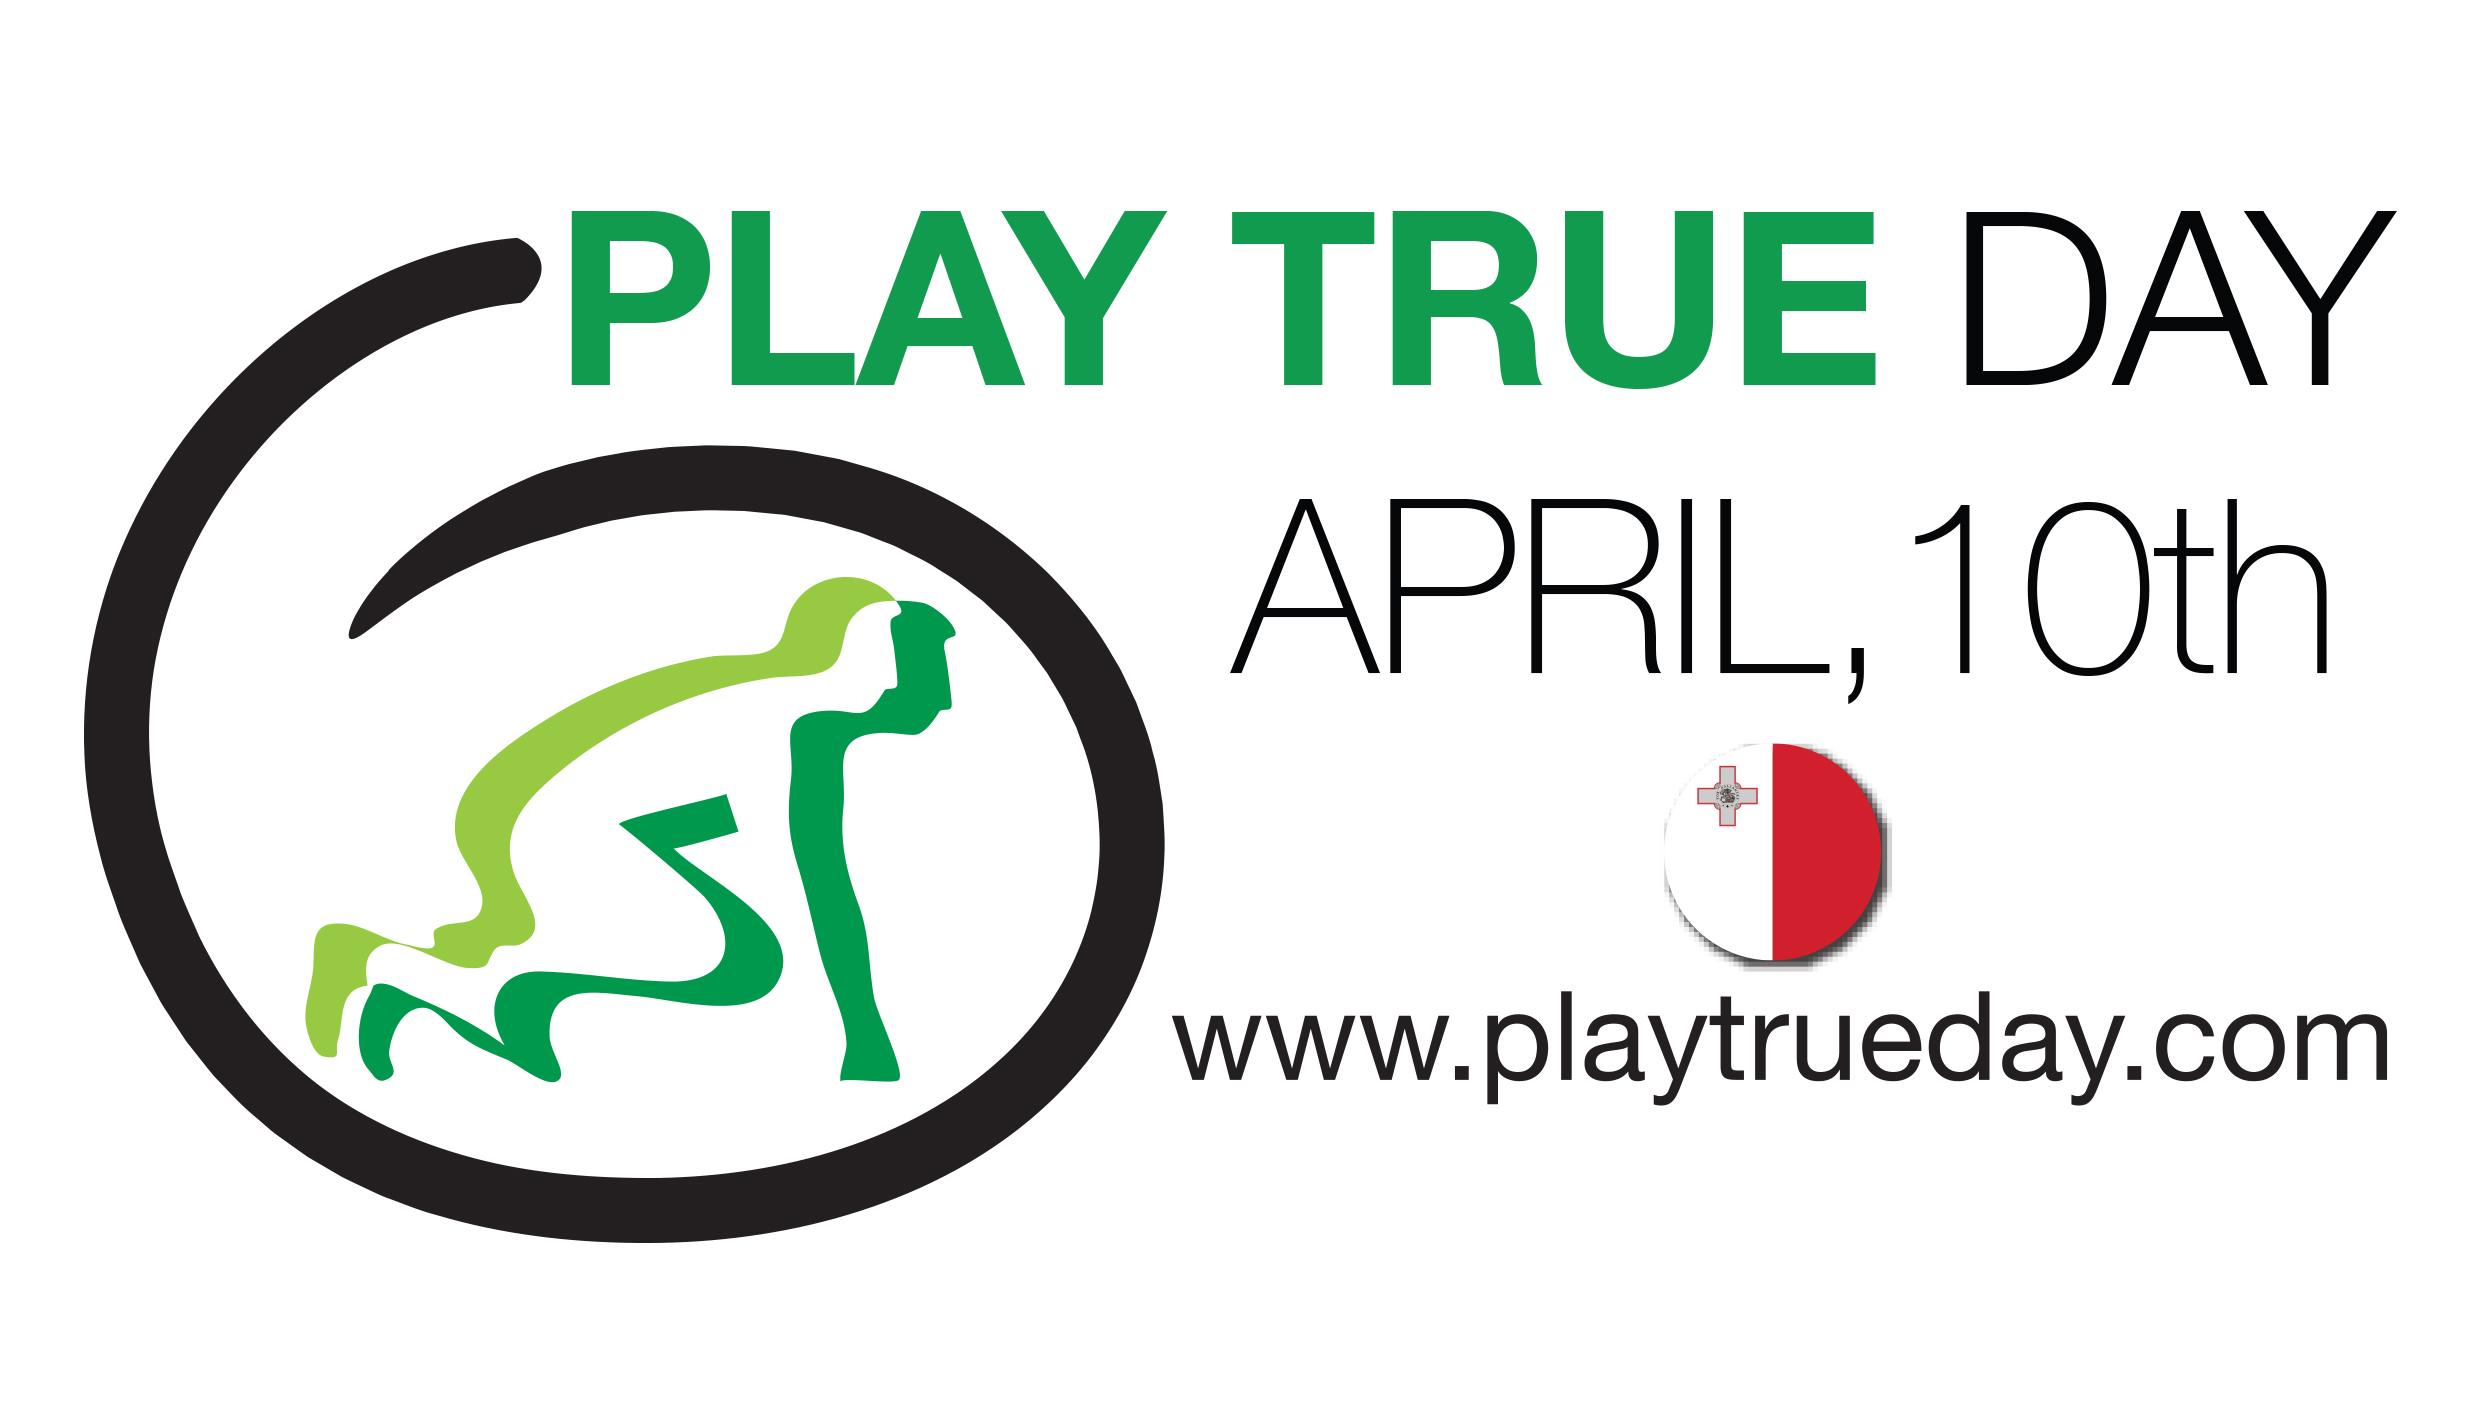 Play true. Wada Play true. Play true антидопинг логотип. Play true Day logo. True player games